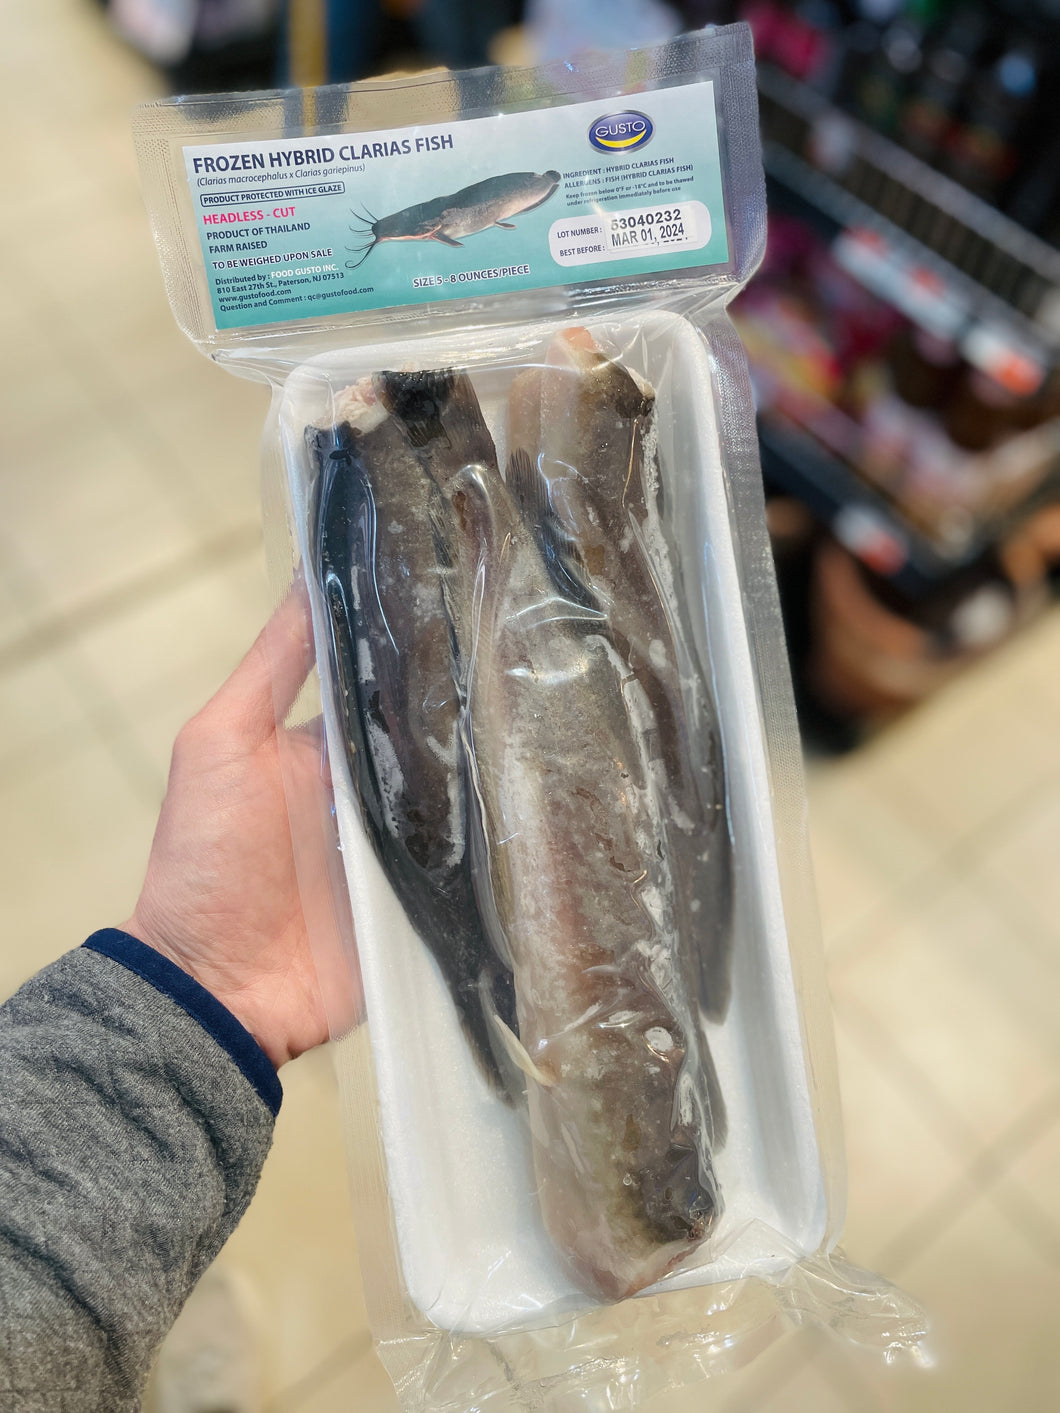 Gusto - Frozen Hybrid Clarias Fish (Catfish) - ปลาดุกตัดหัว แช่แข็ง